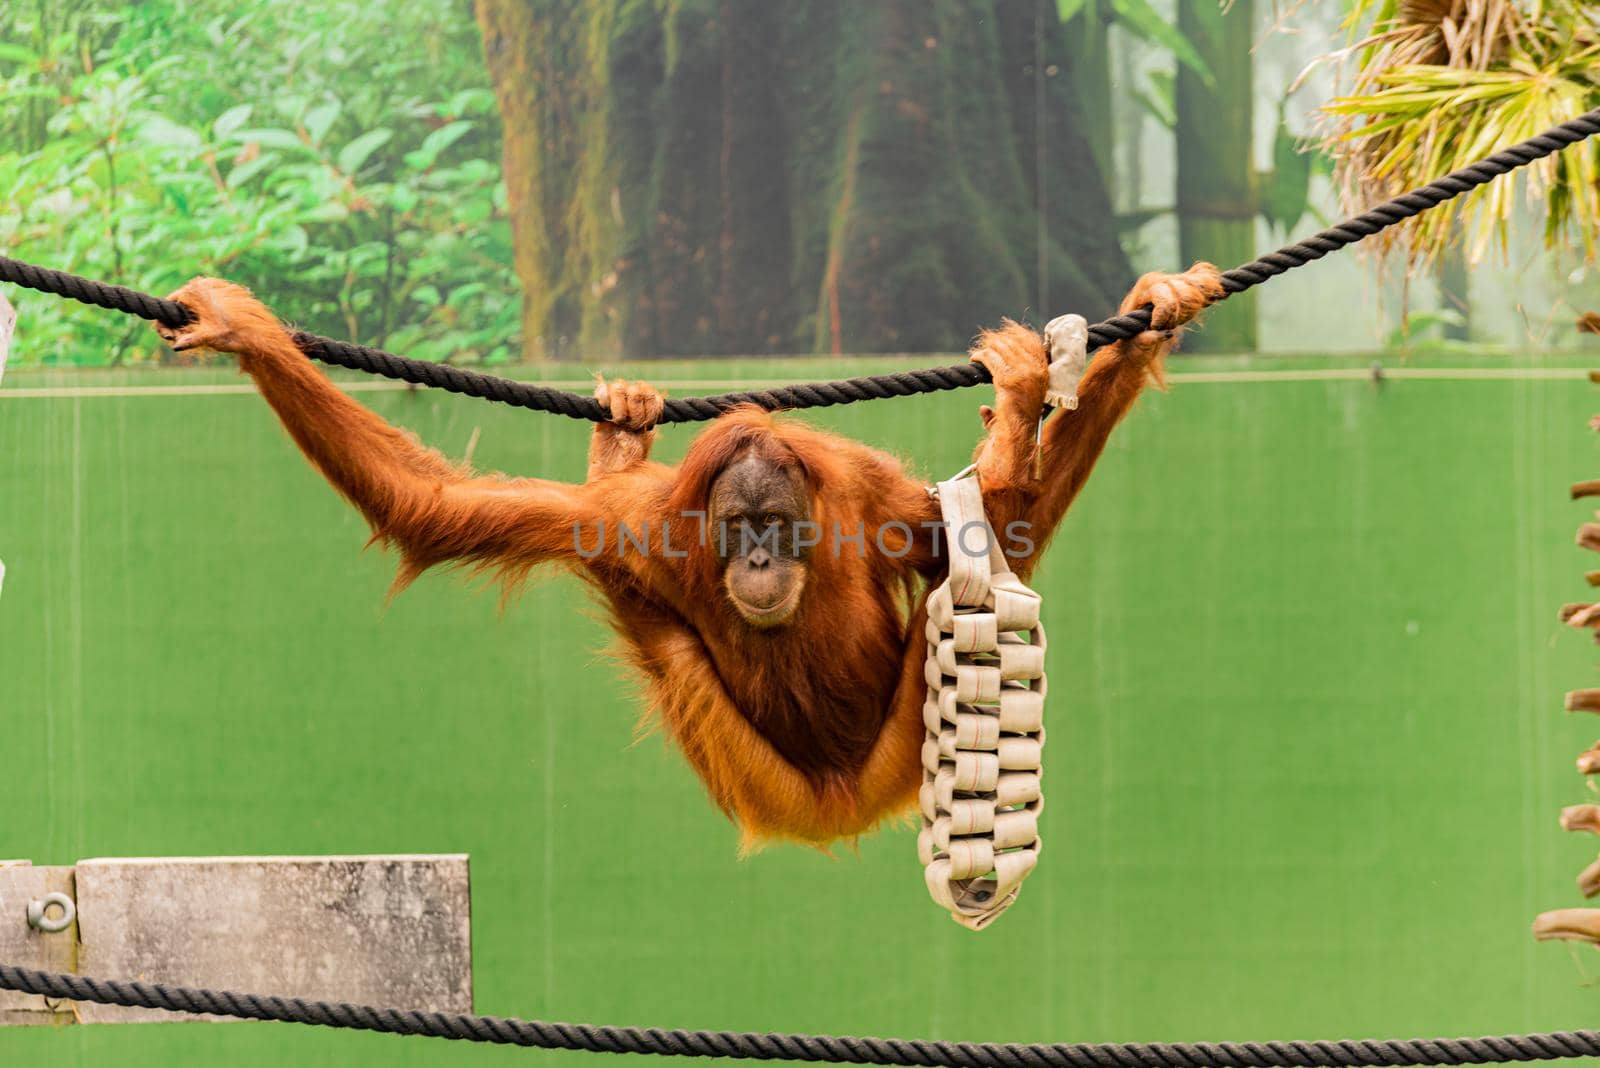 orangutan swinging on rope in a funny pose